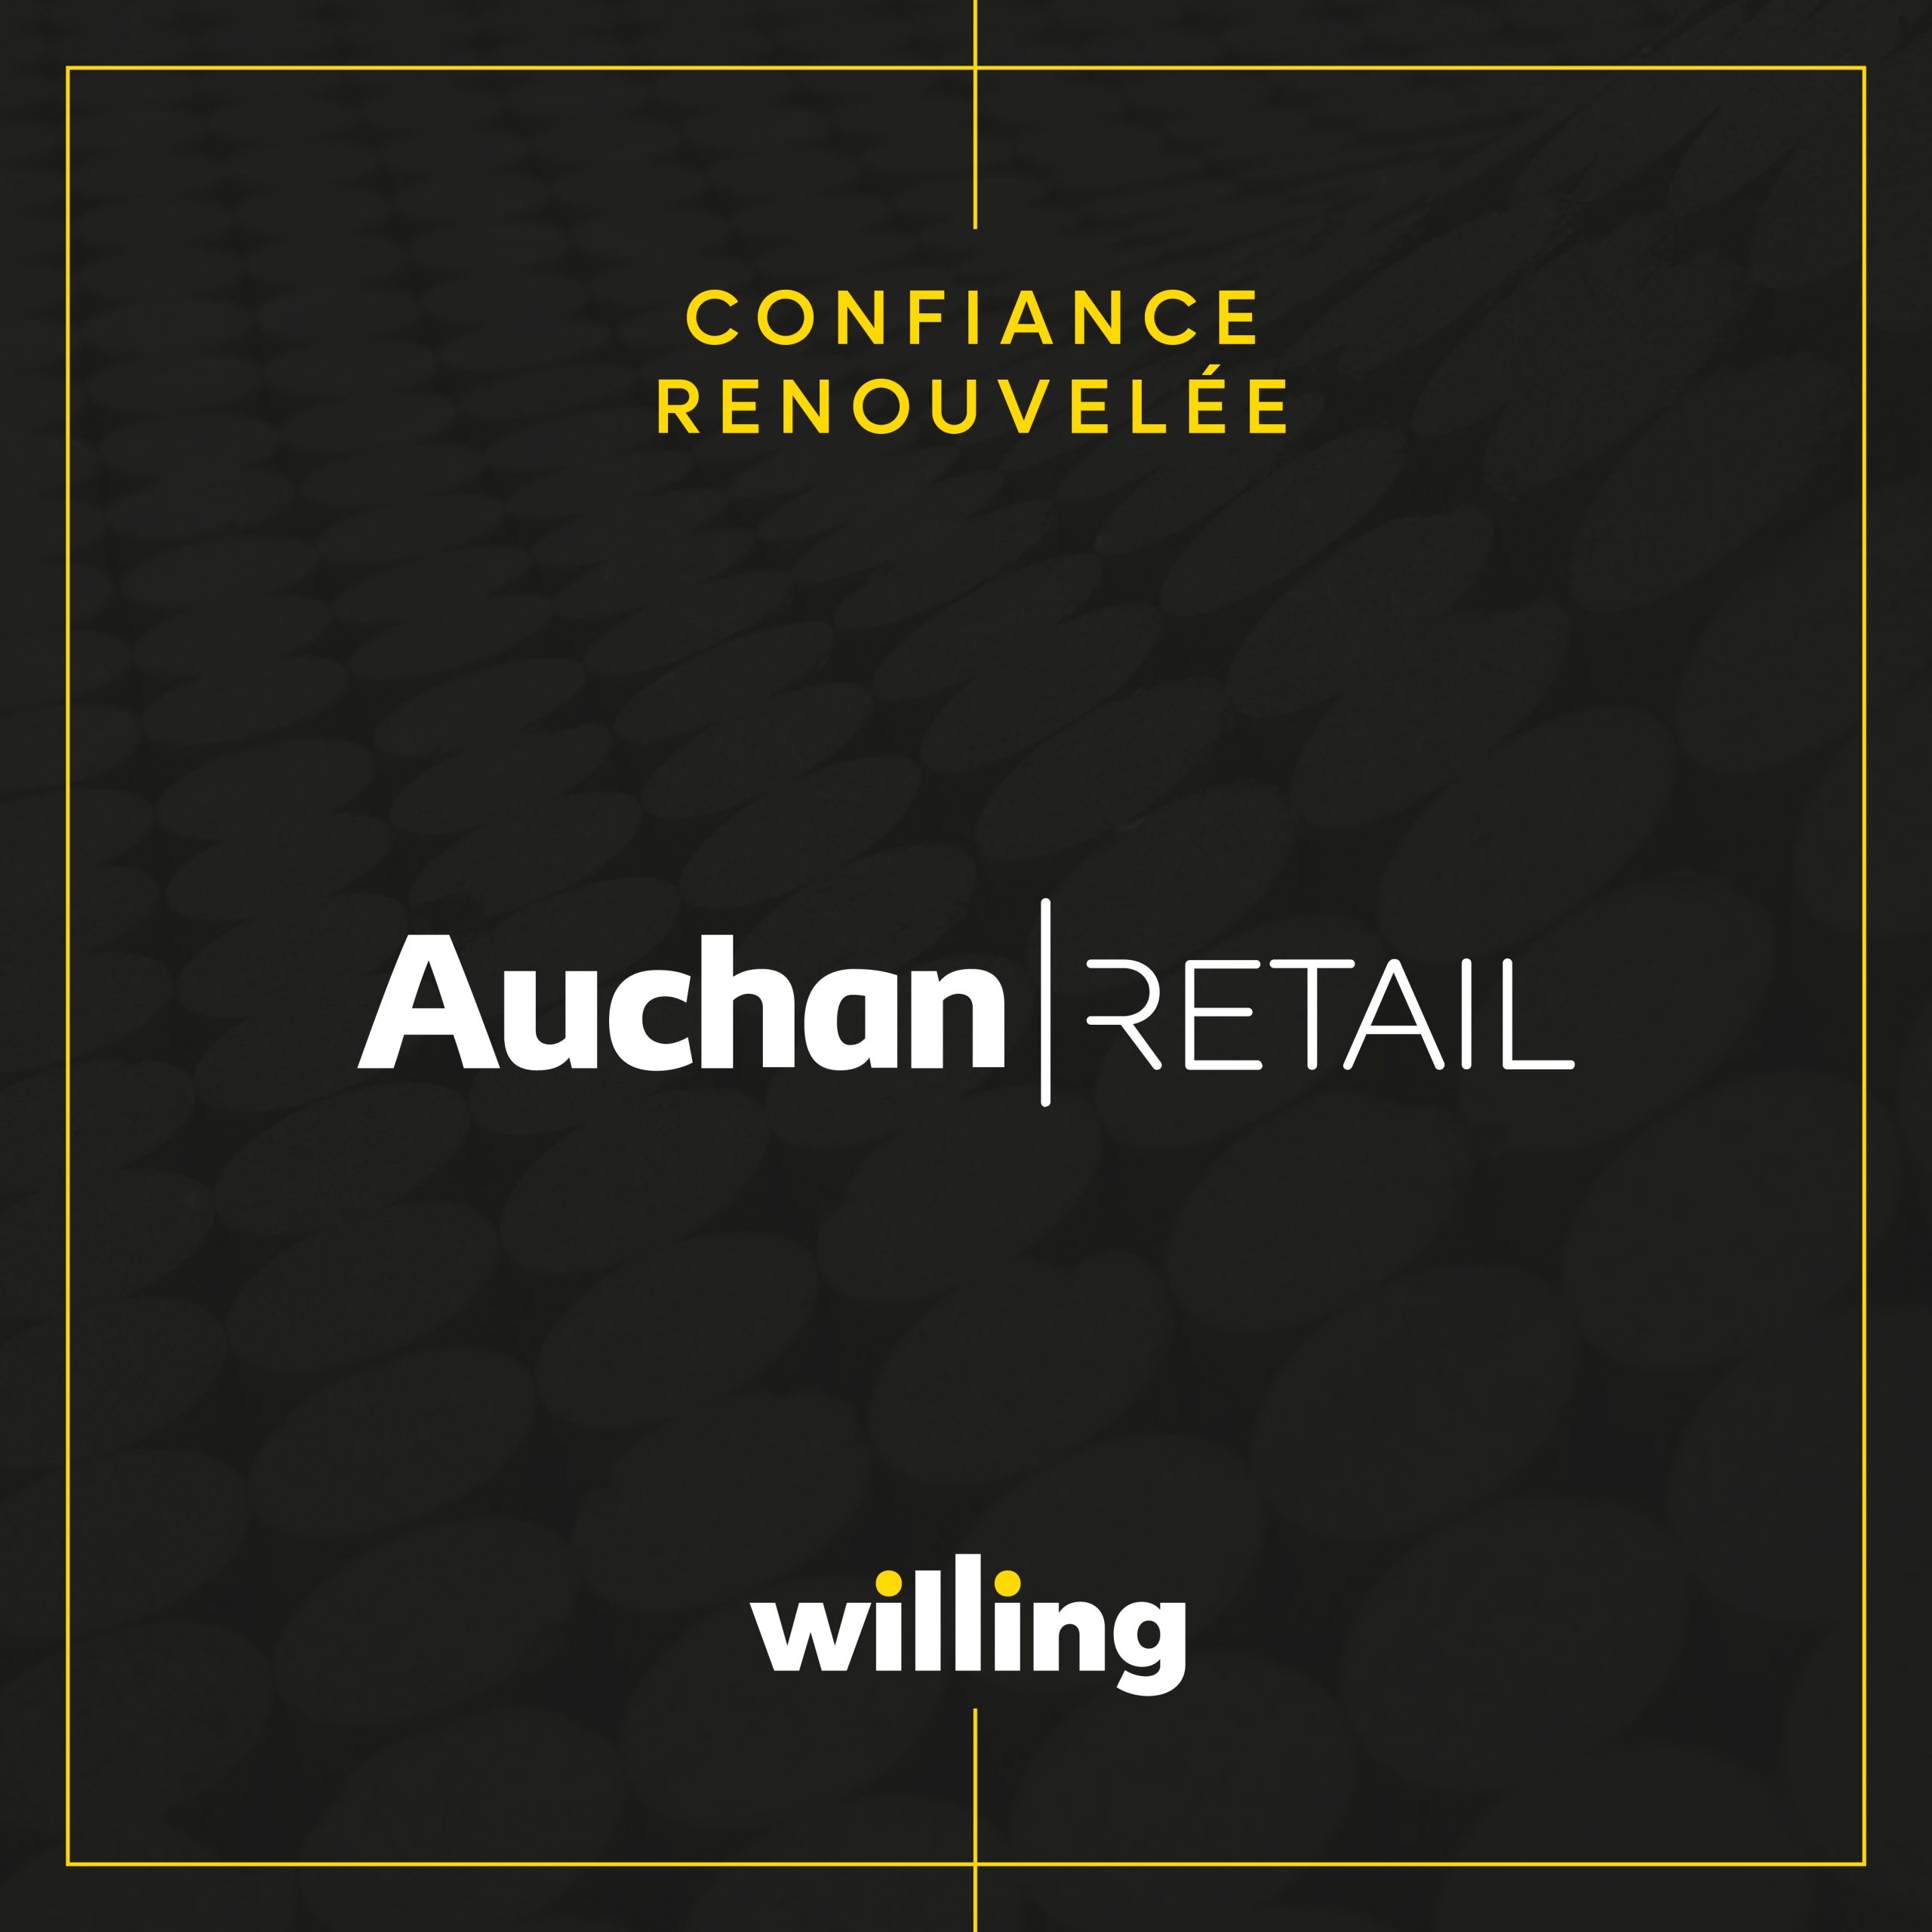 Auchan retail